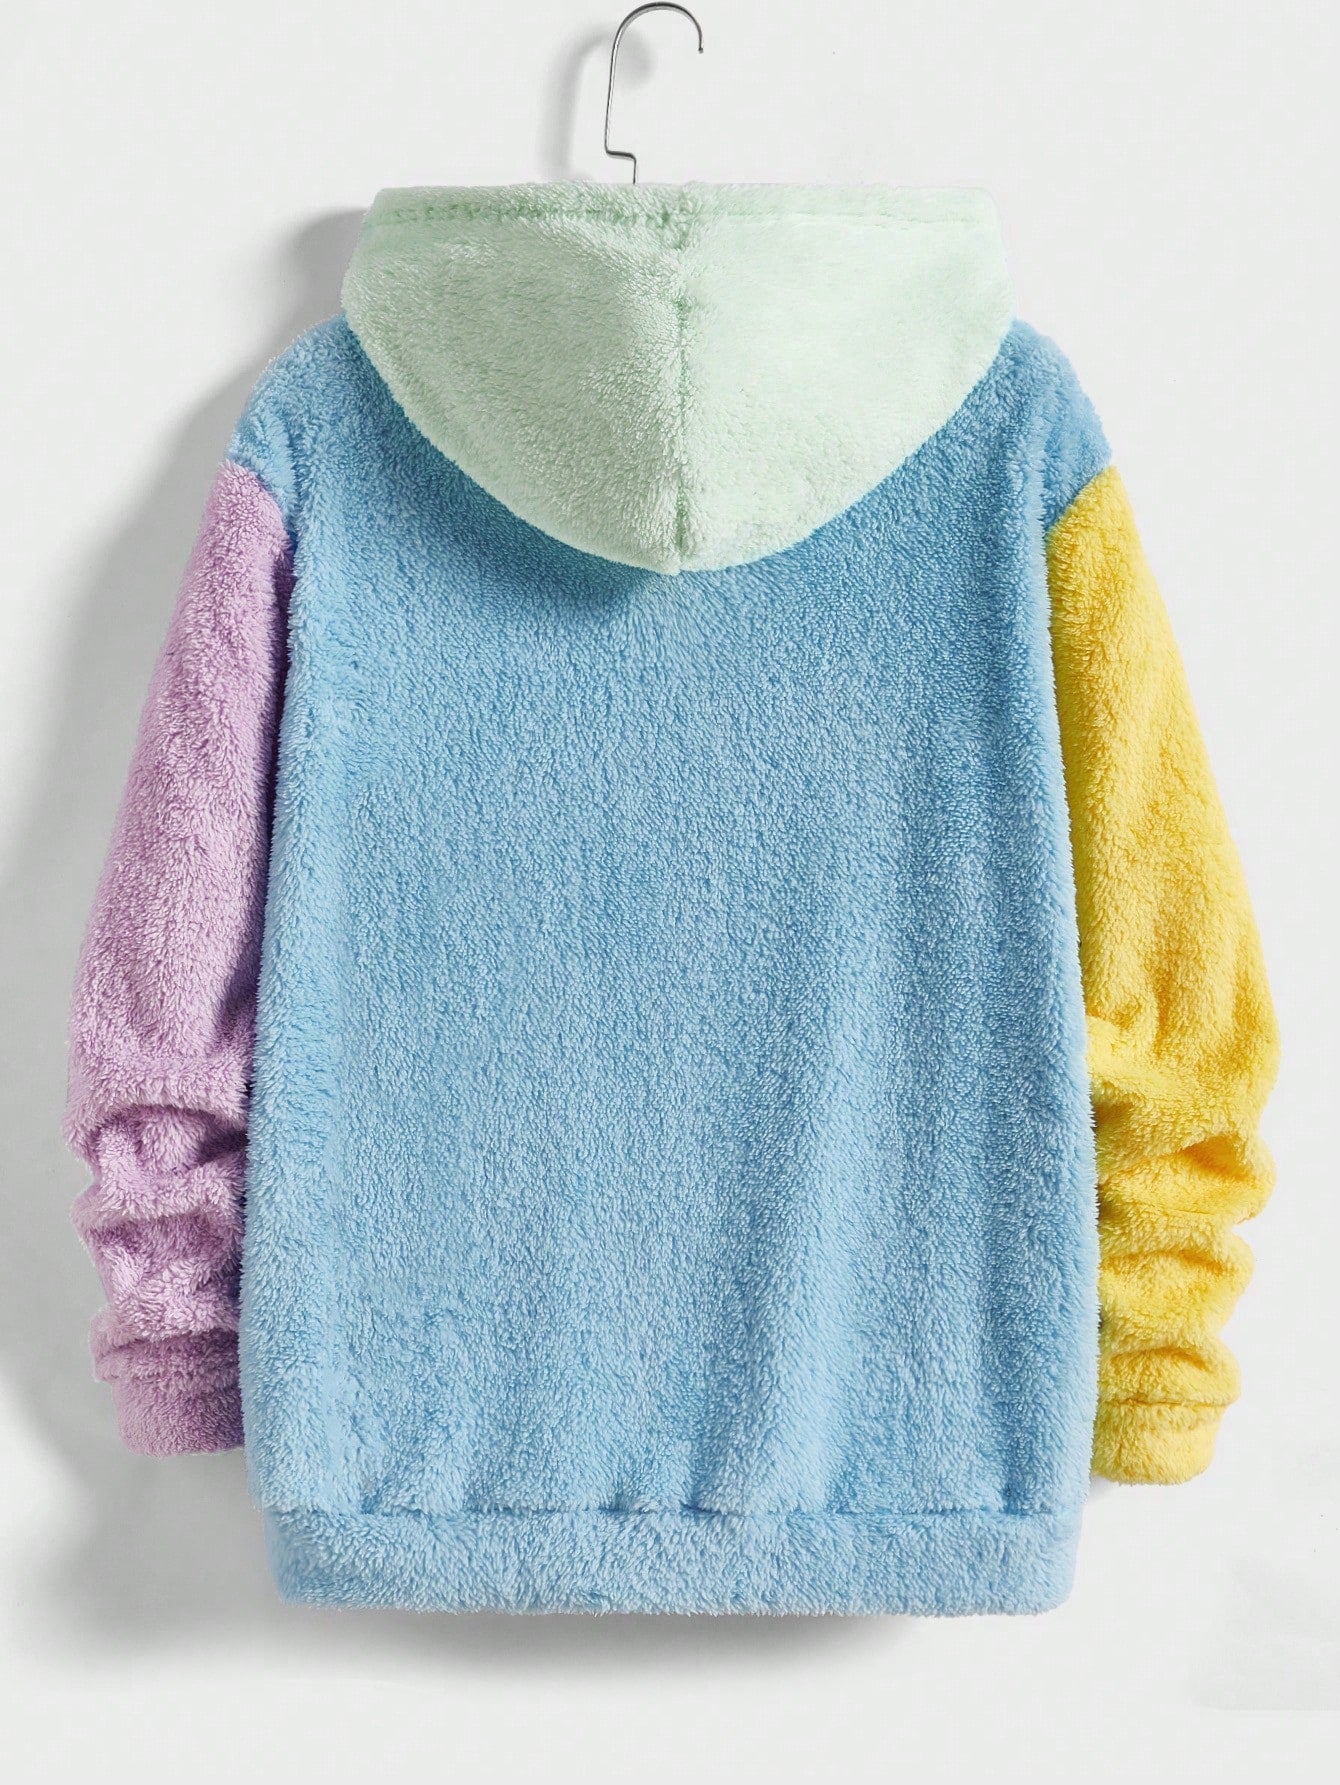 Nextthink Knitted Casual Fleece Patchwork Pullover - NextthinkShopsm2307183097971428